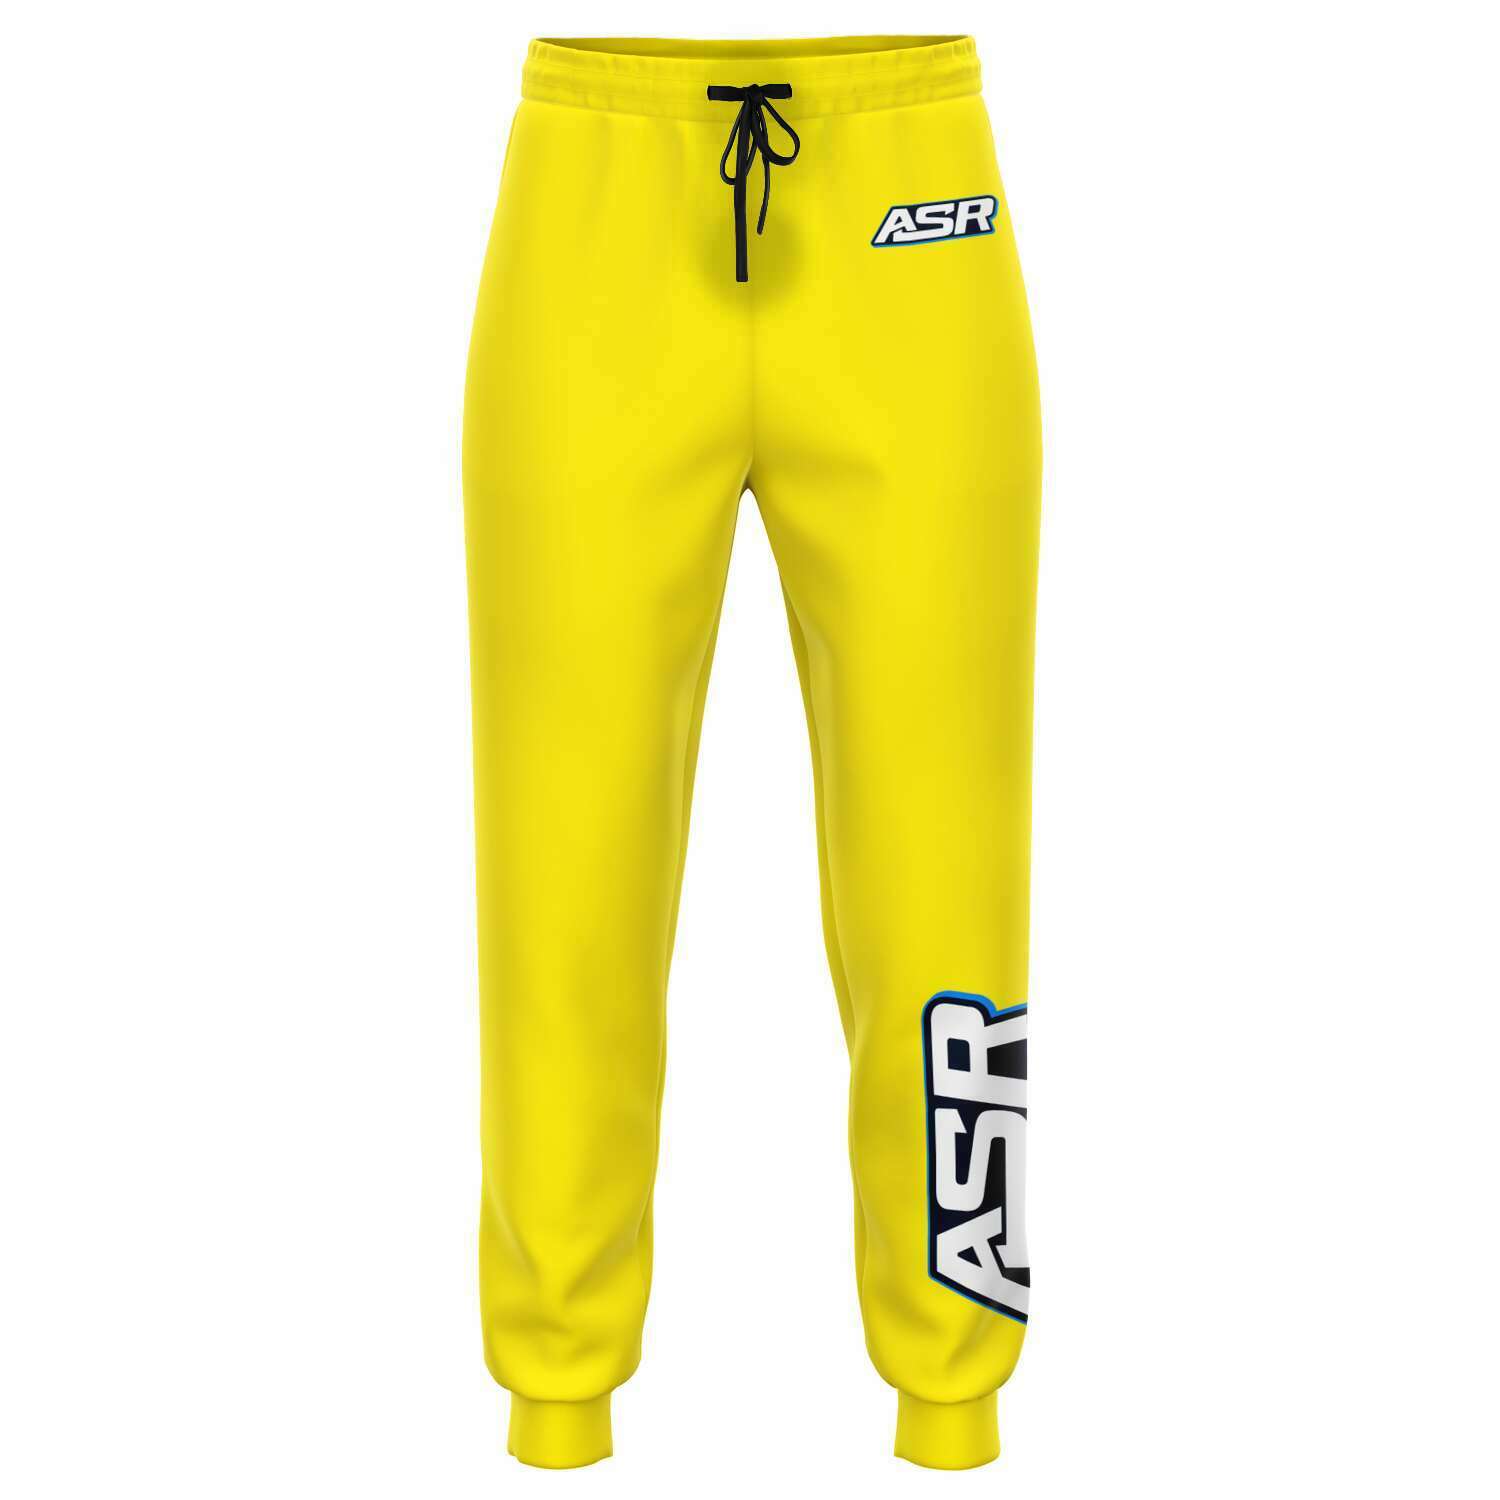 ASR Yellow Track Pants